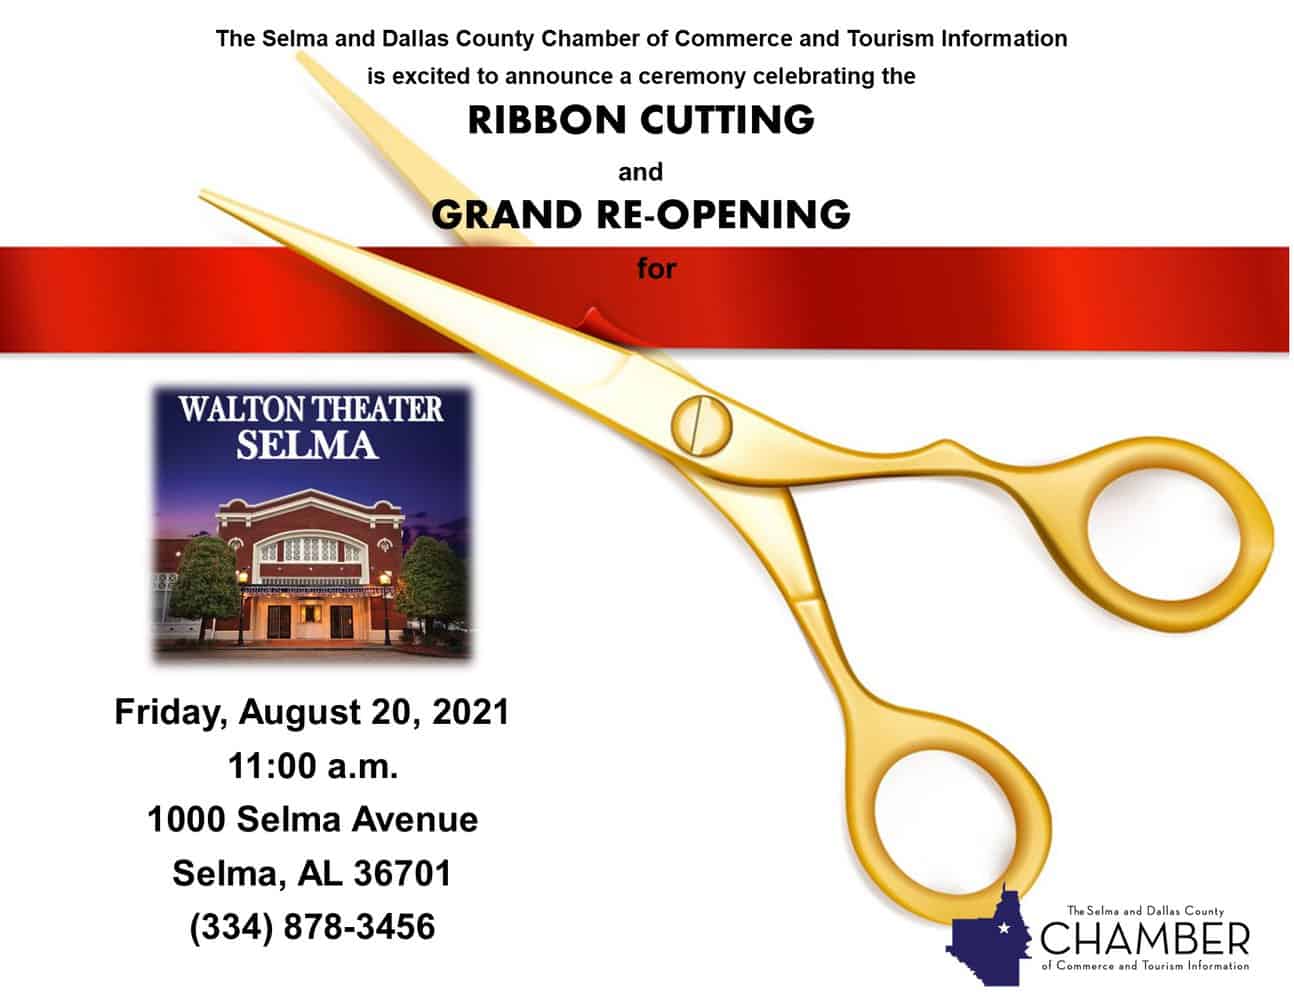 Walton_Theater_Selma_Grand_Re-_Opening_Ribbon_Cutting_Celebration.jpg